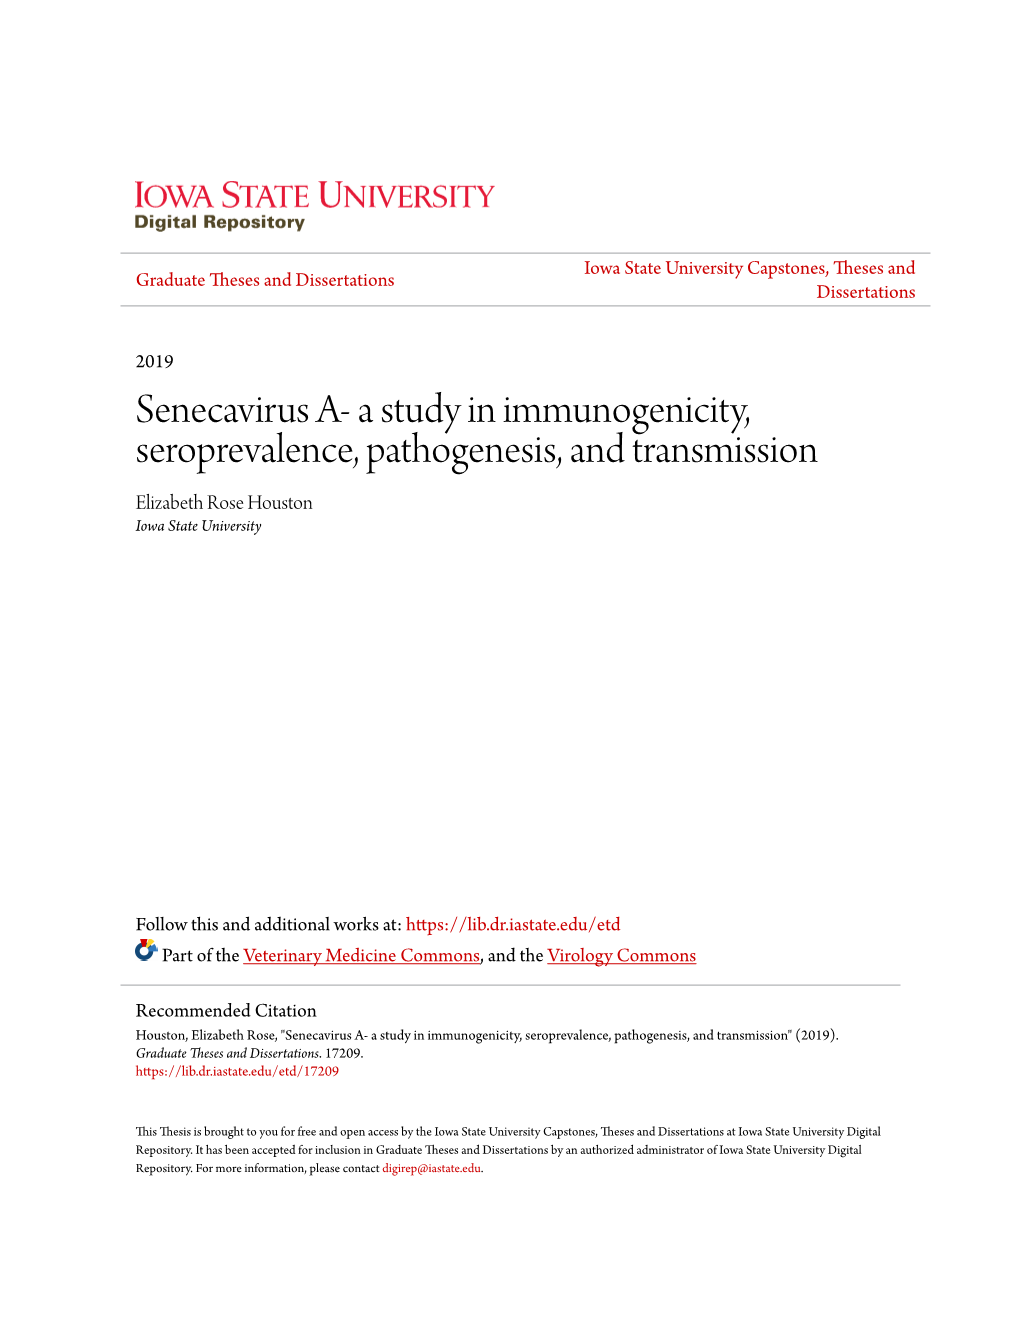 Senecavirus A- a Study in Immunogenicity, Seroprevalence, Pathogenesis, and Transmission Elizabeth Rose Houston Iowa State University